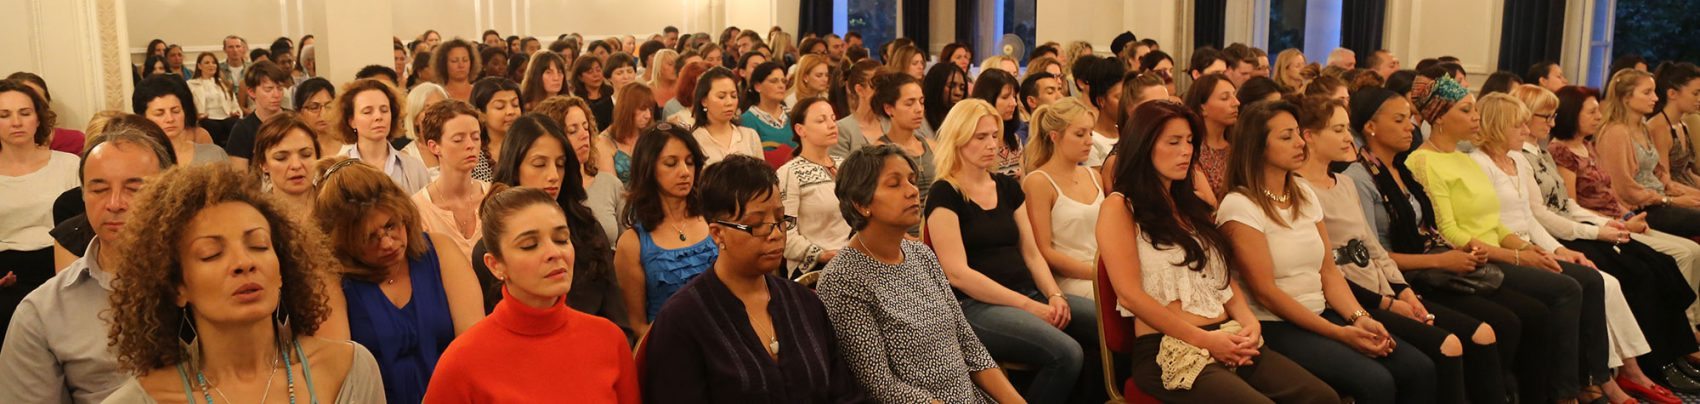 MeditationEvening Crowd - ThetaHealing® Meditation Evening and Sound Bath - Soul Mates & Sacred Love